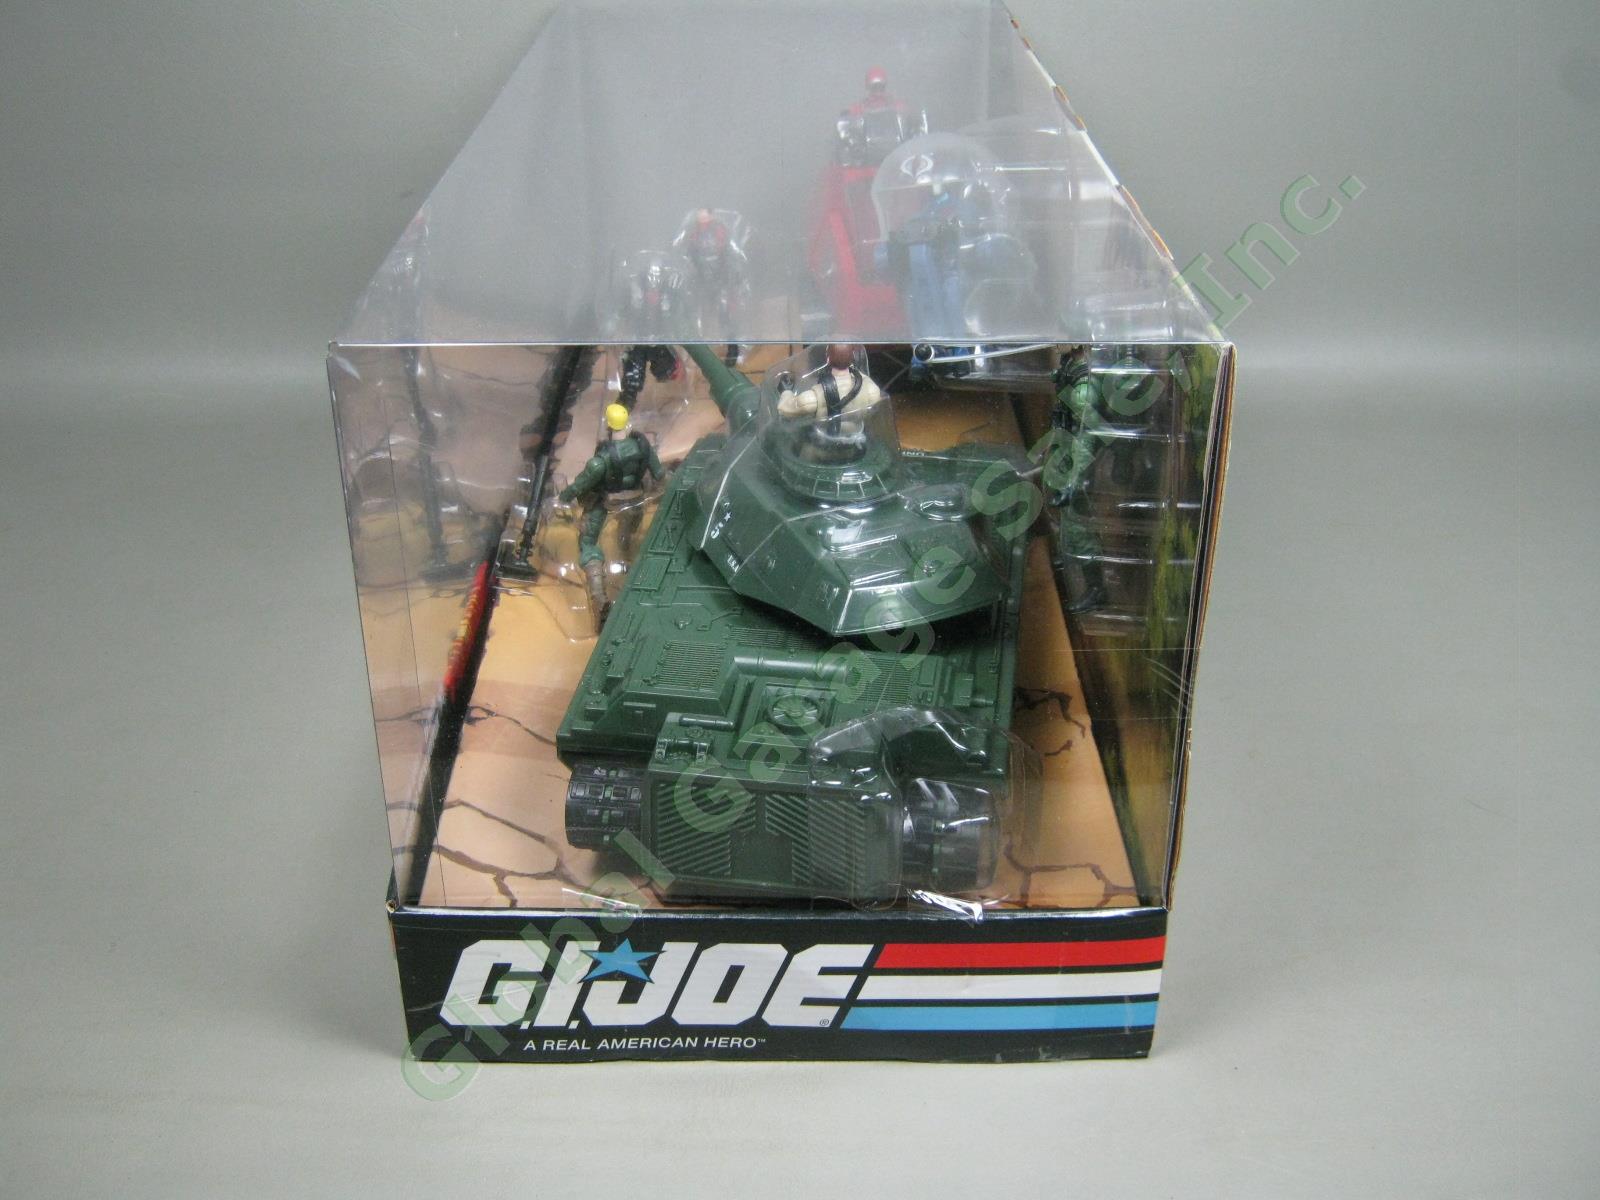 NIB 2008 GI Joe Target Exclusive Ultimate Battle Pack MOBAT Tank 7 Figures Lot 3